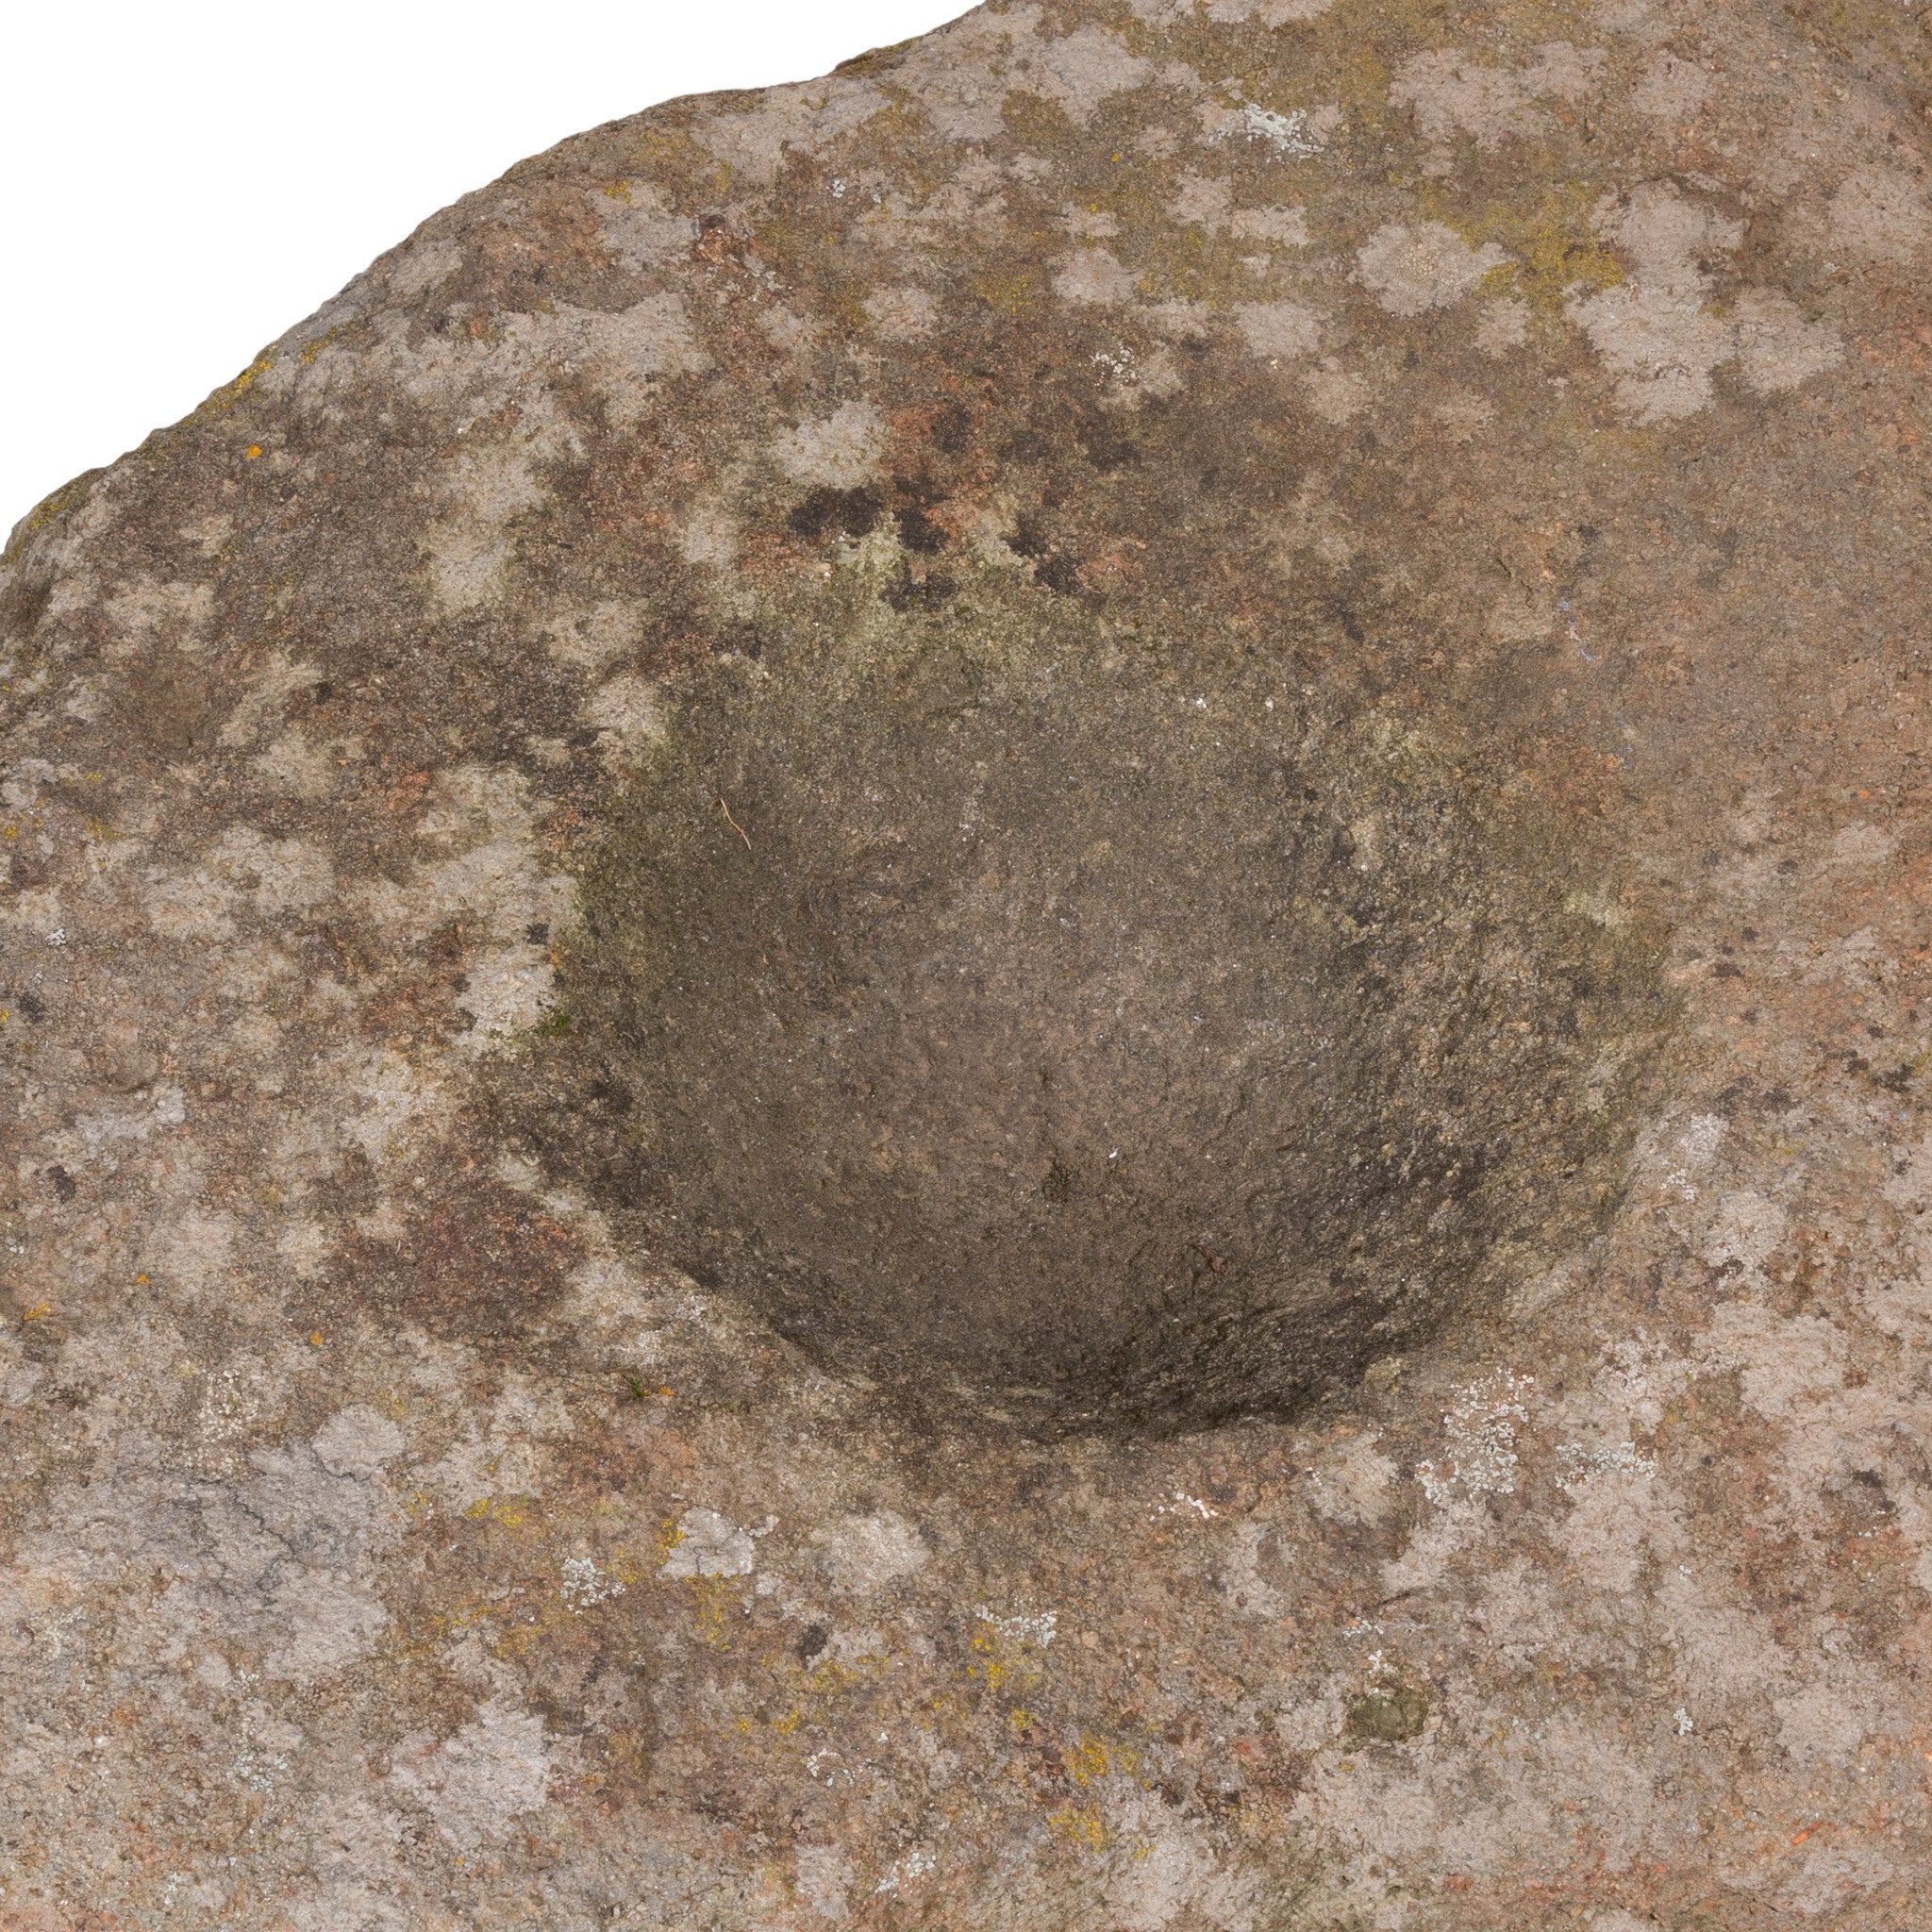 Large Prehistoric Grinding Stone